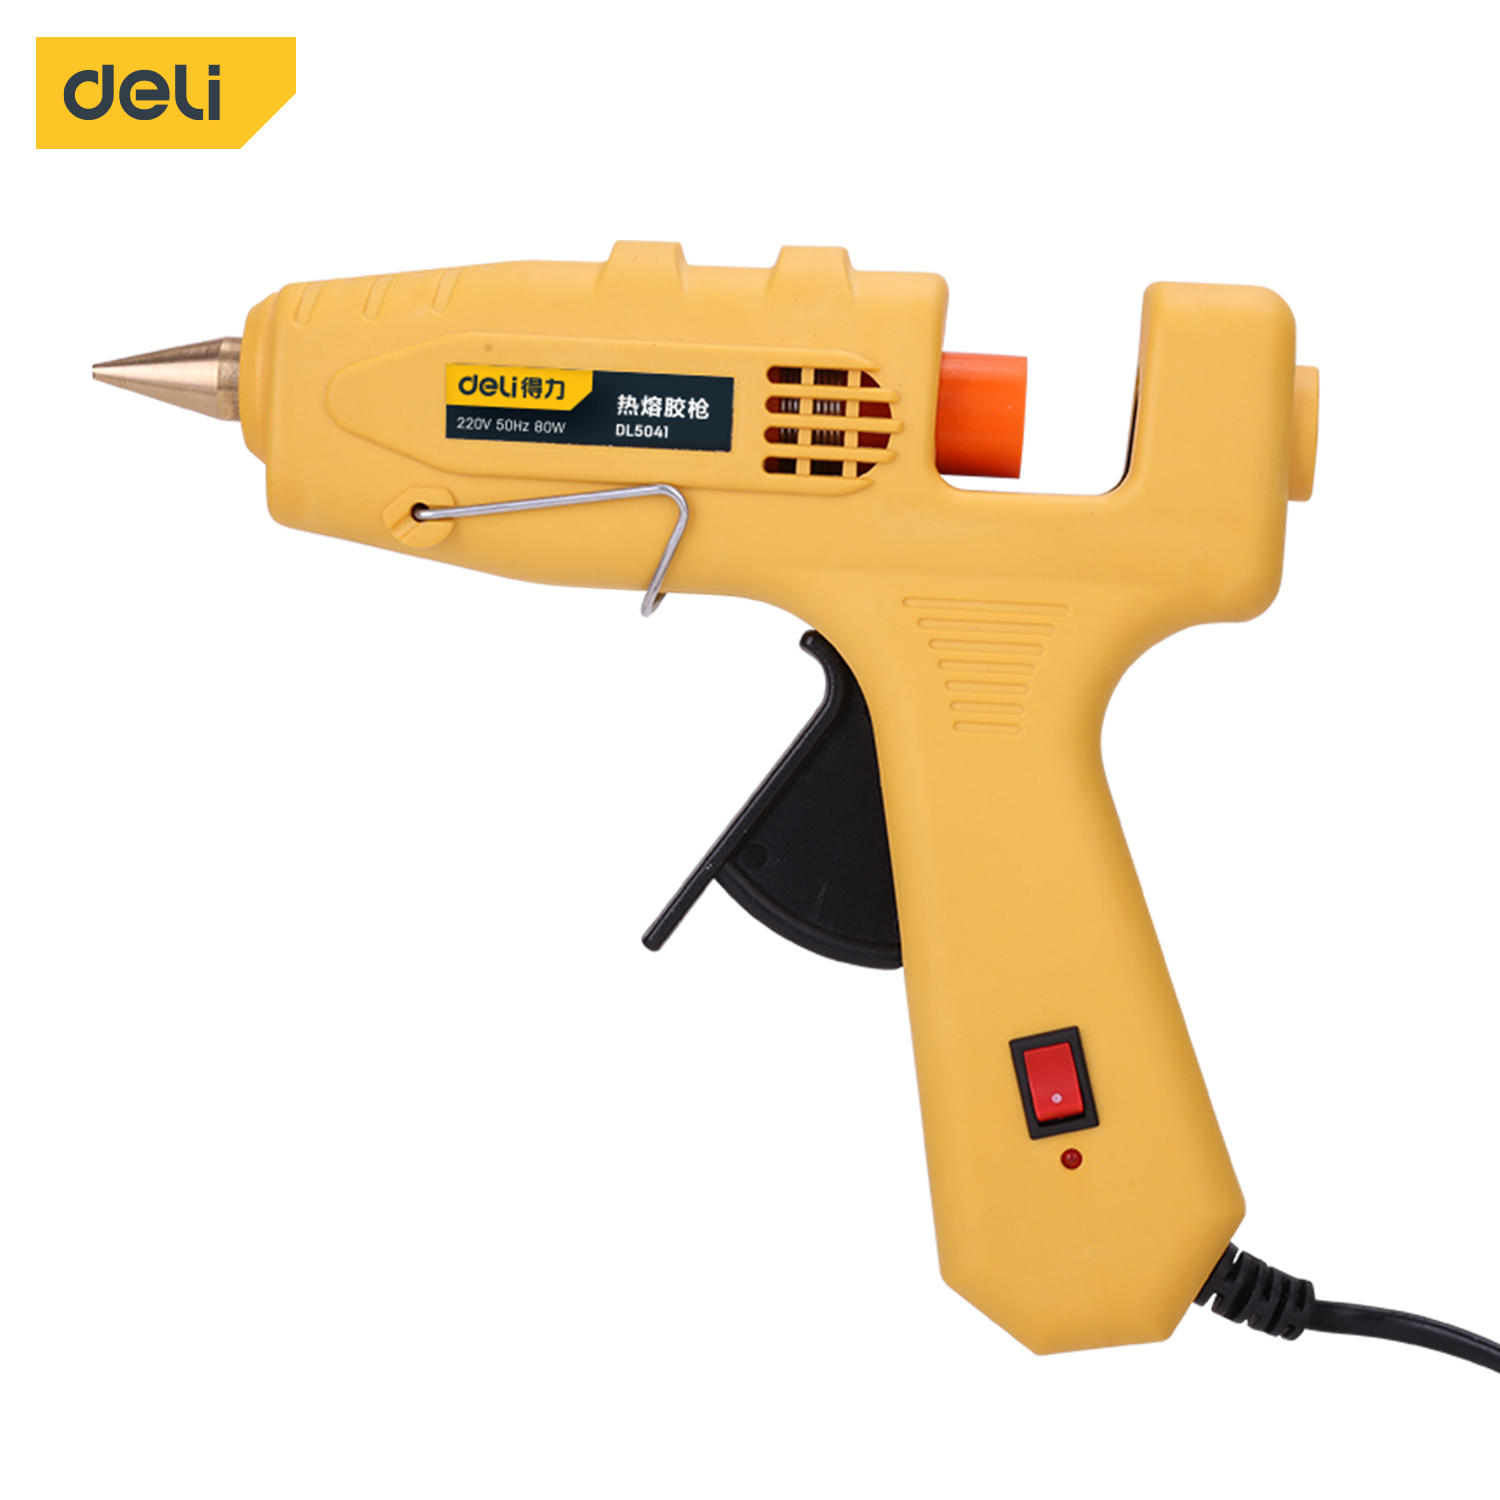 Deli-DL5041 Hot Melt Glue Gun